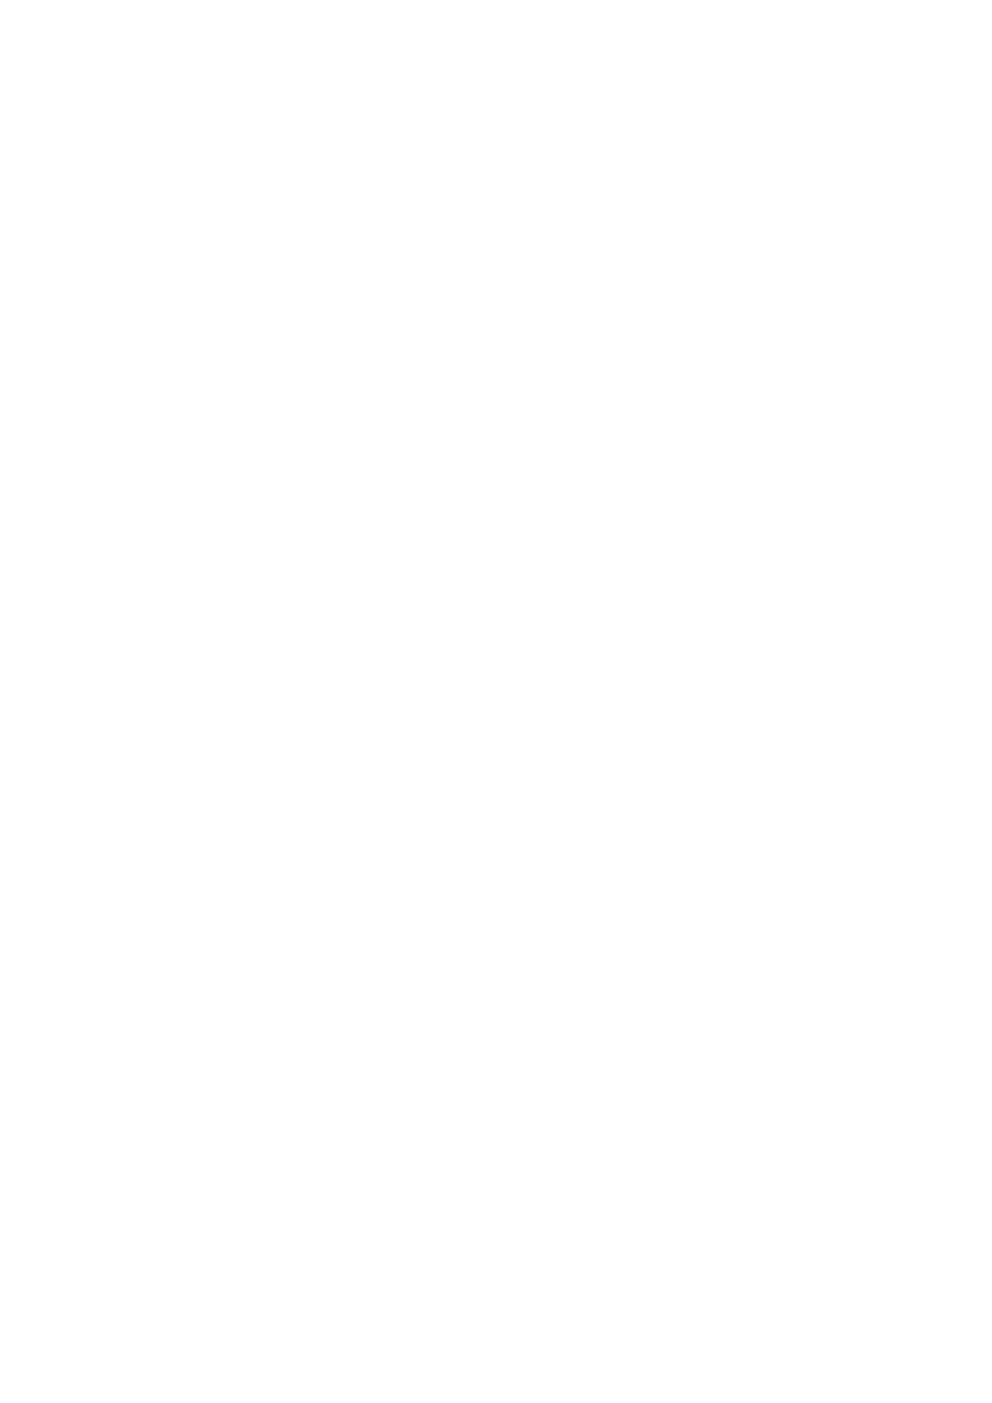 Hexagons Background